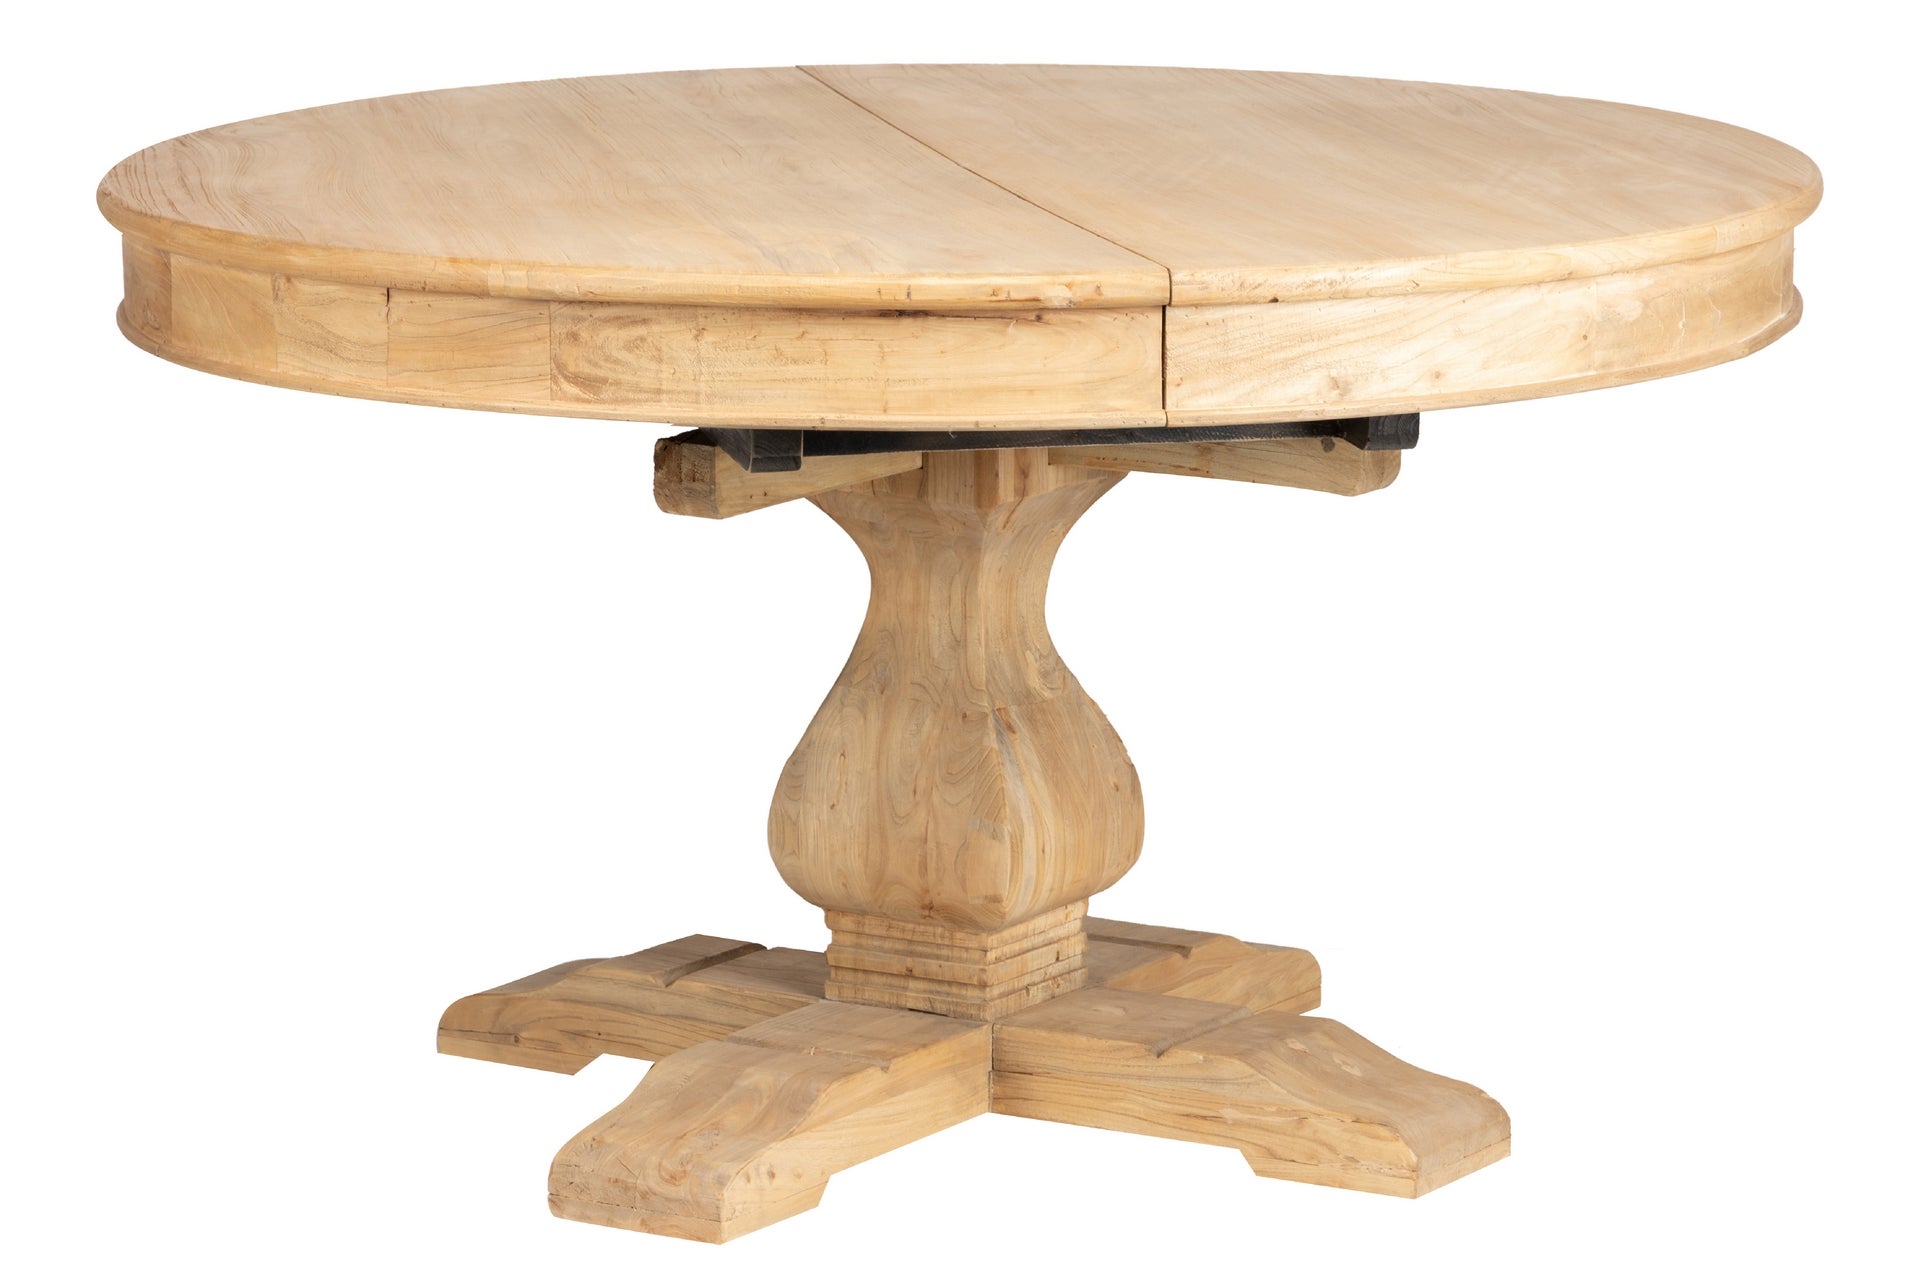 Panera mesa c/tabla pan madera encerado con tapa de persiana